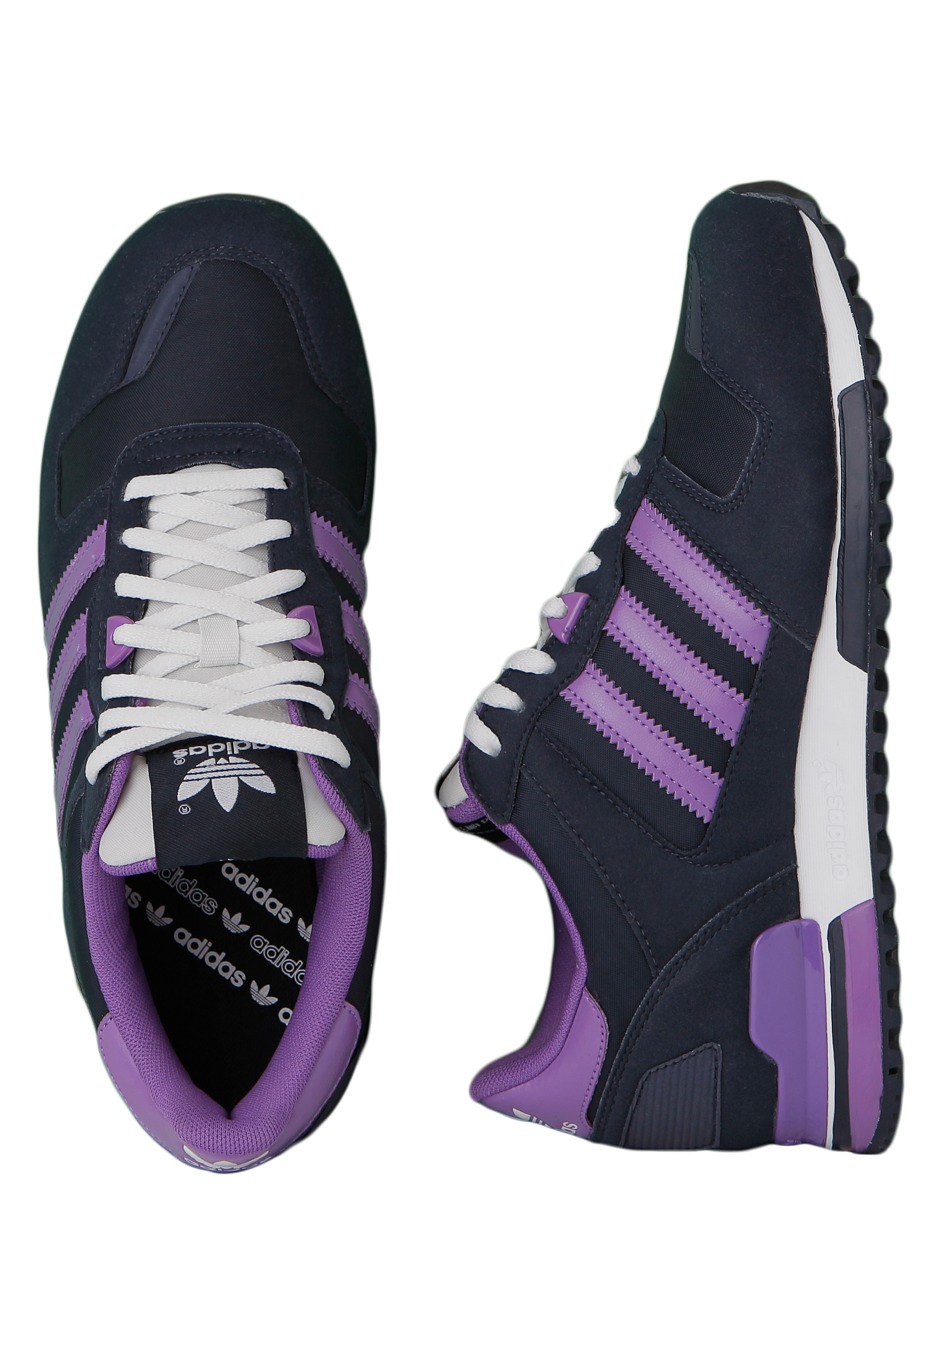 adidas zx 700 purple